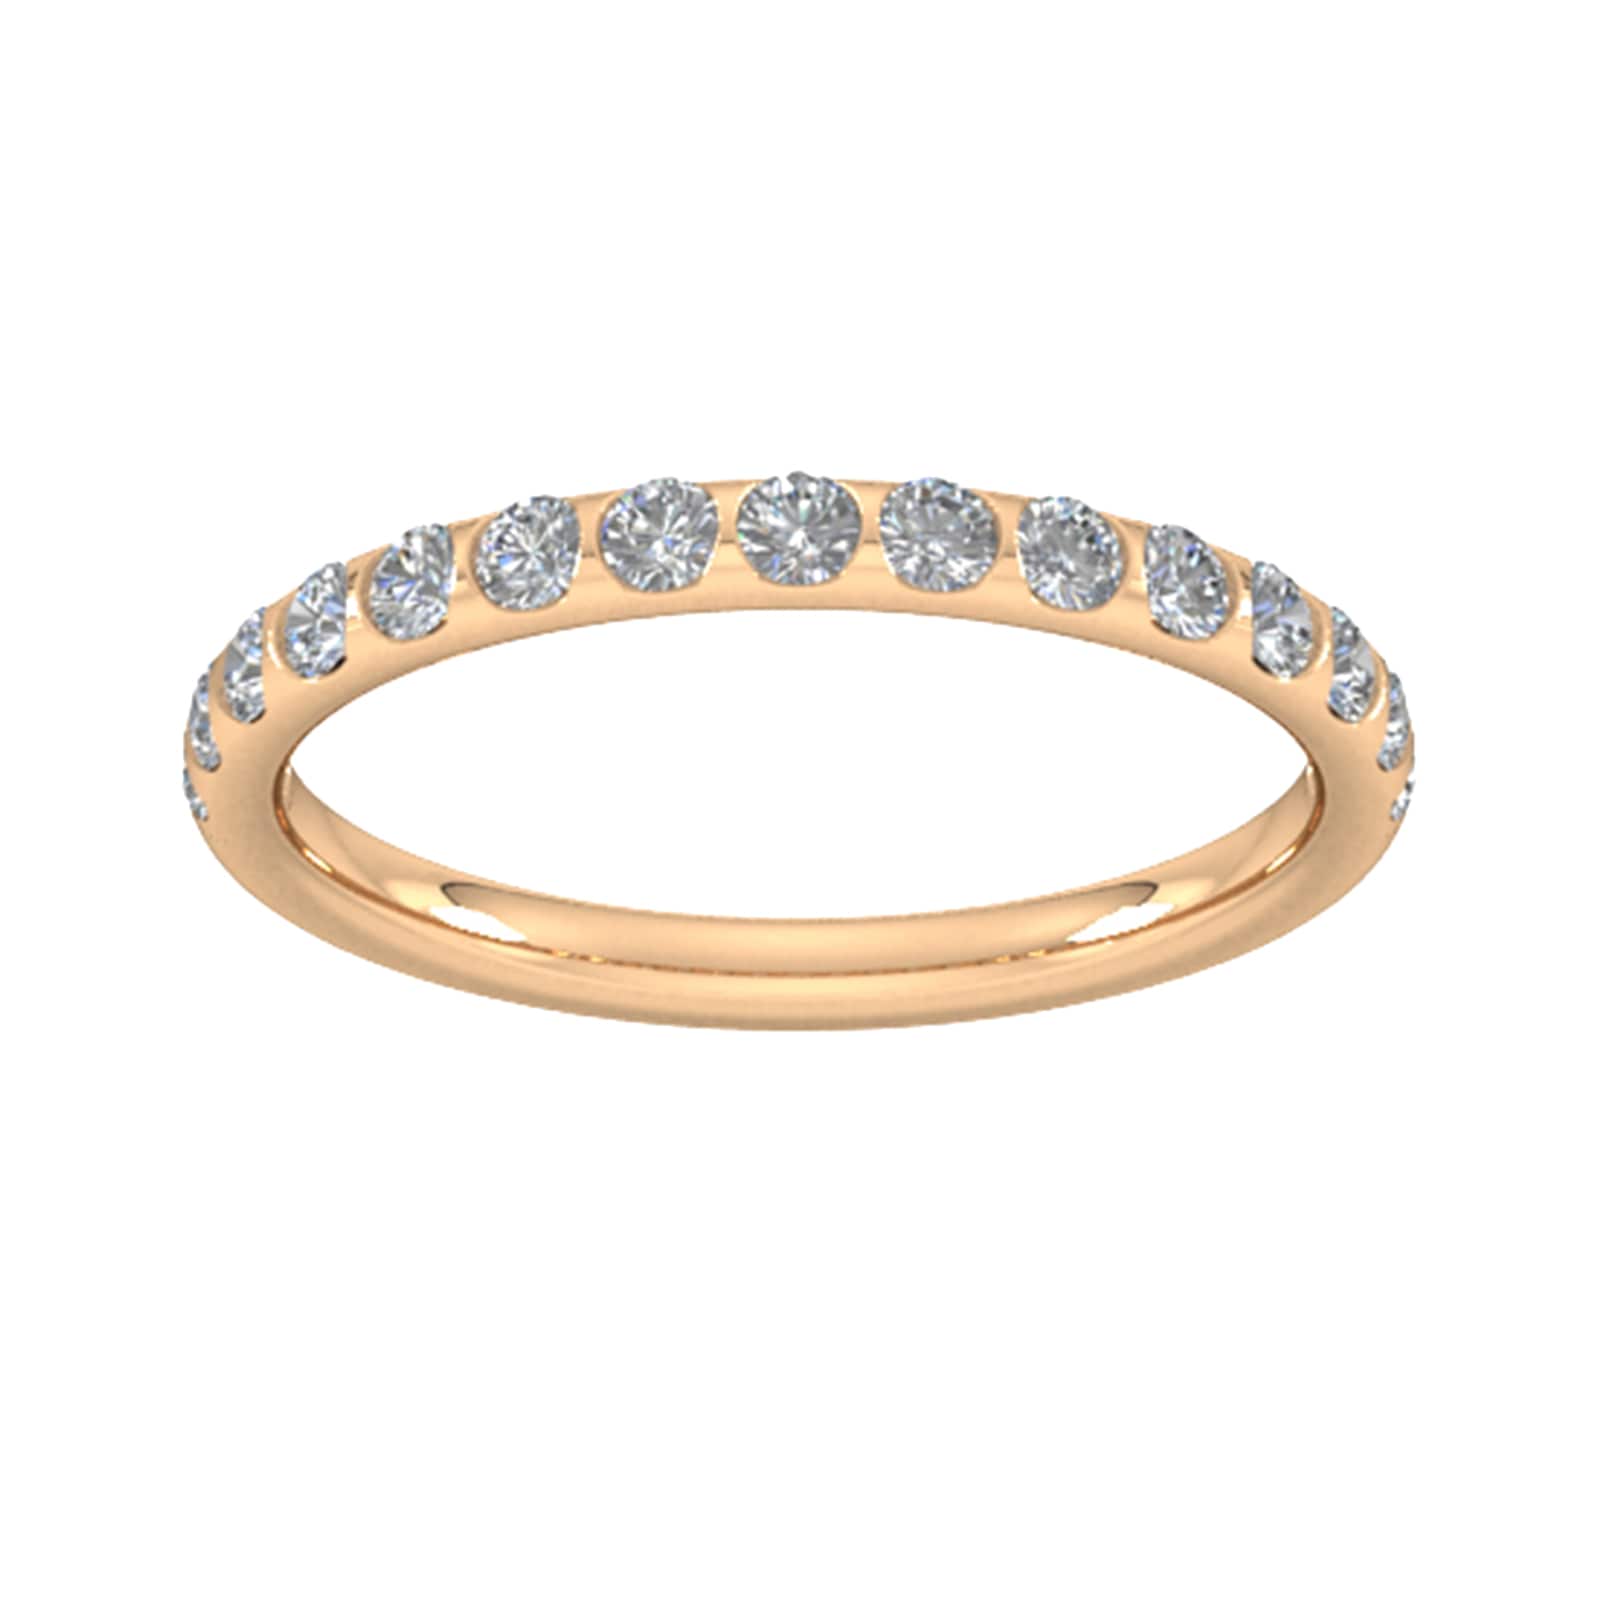 0.53 Carat Total Weight Curved Bar Brilliant Cut Diamond Set Wedding Ring In 18 Carat Rose Gold - Ring Size N